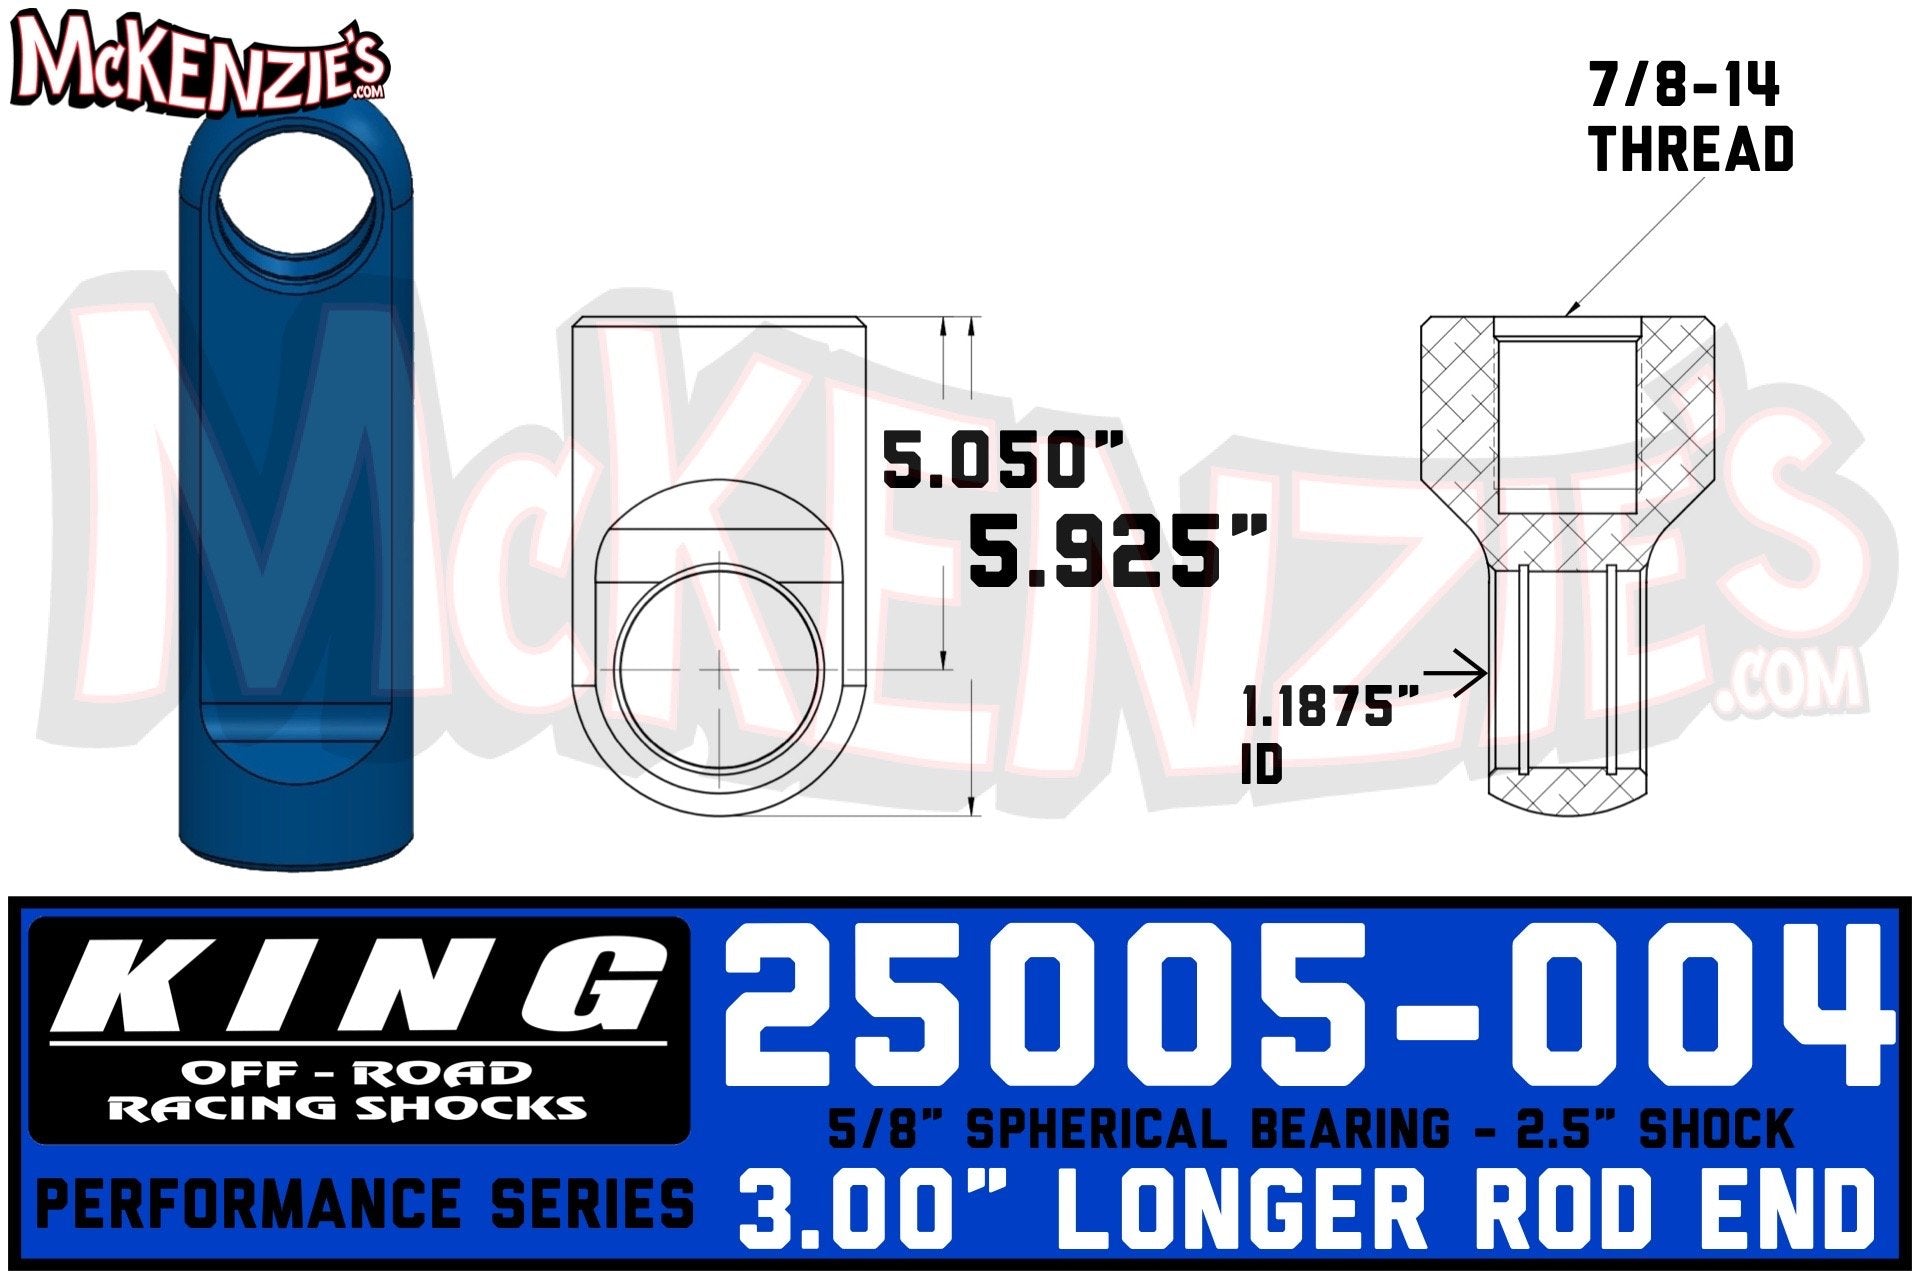 King Shocks 25005-004, 3.00 Longer Rod End, .875-14 THD